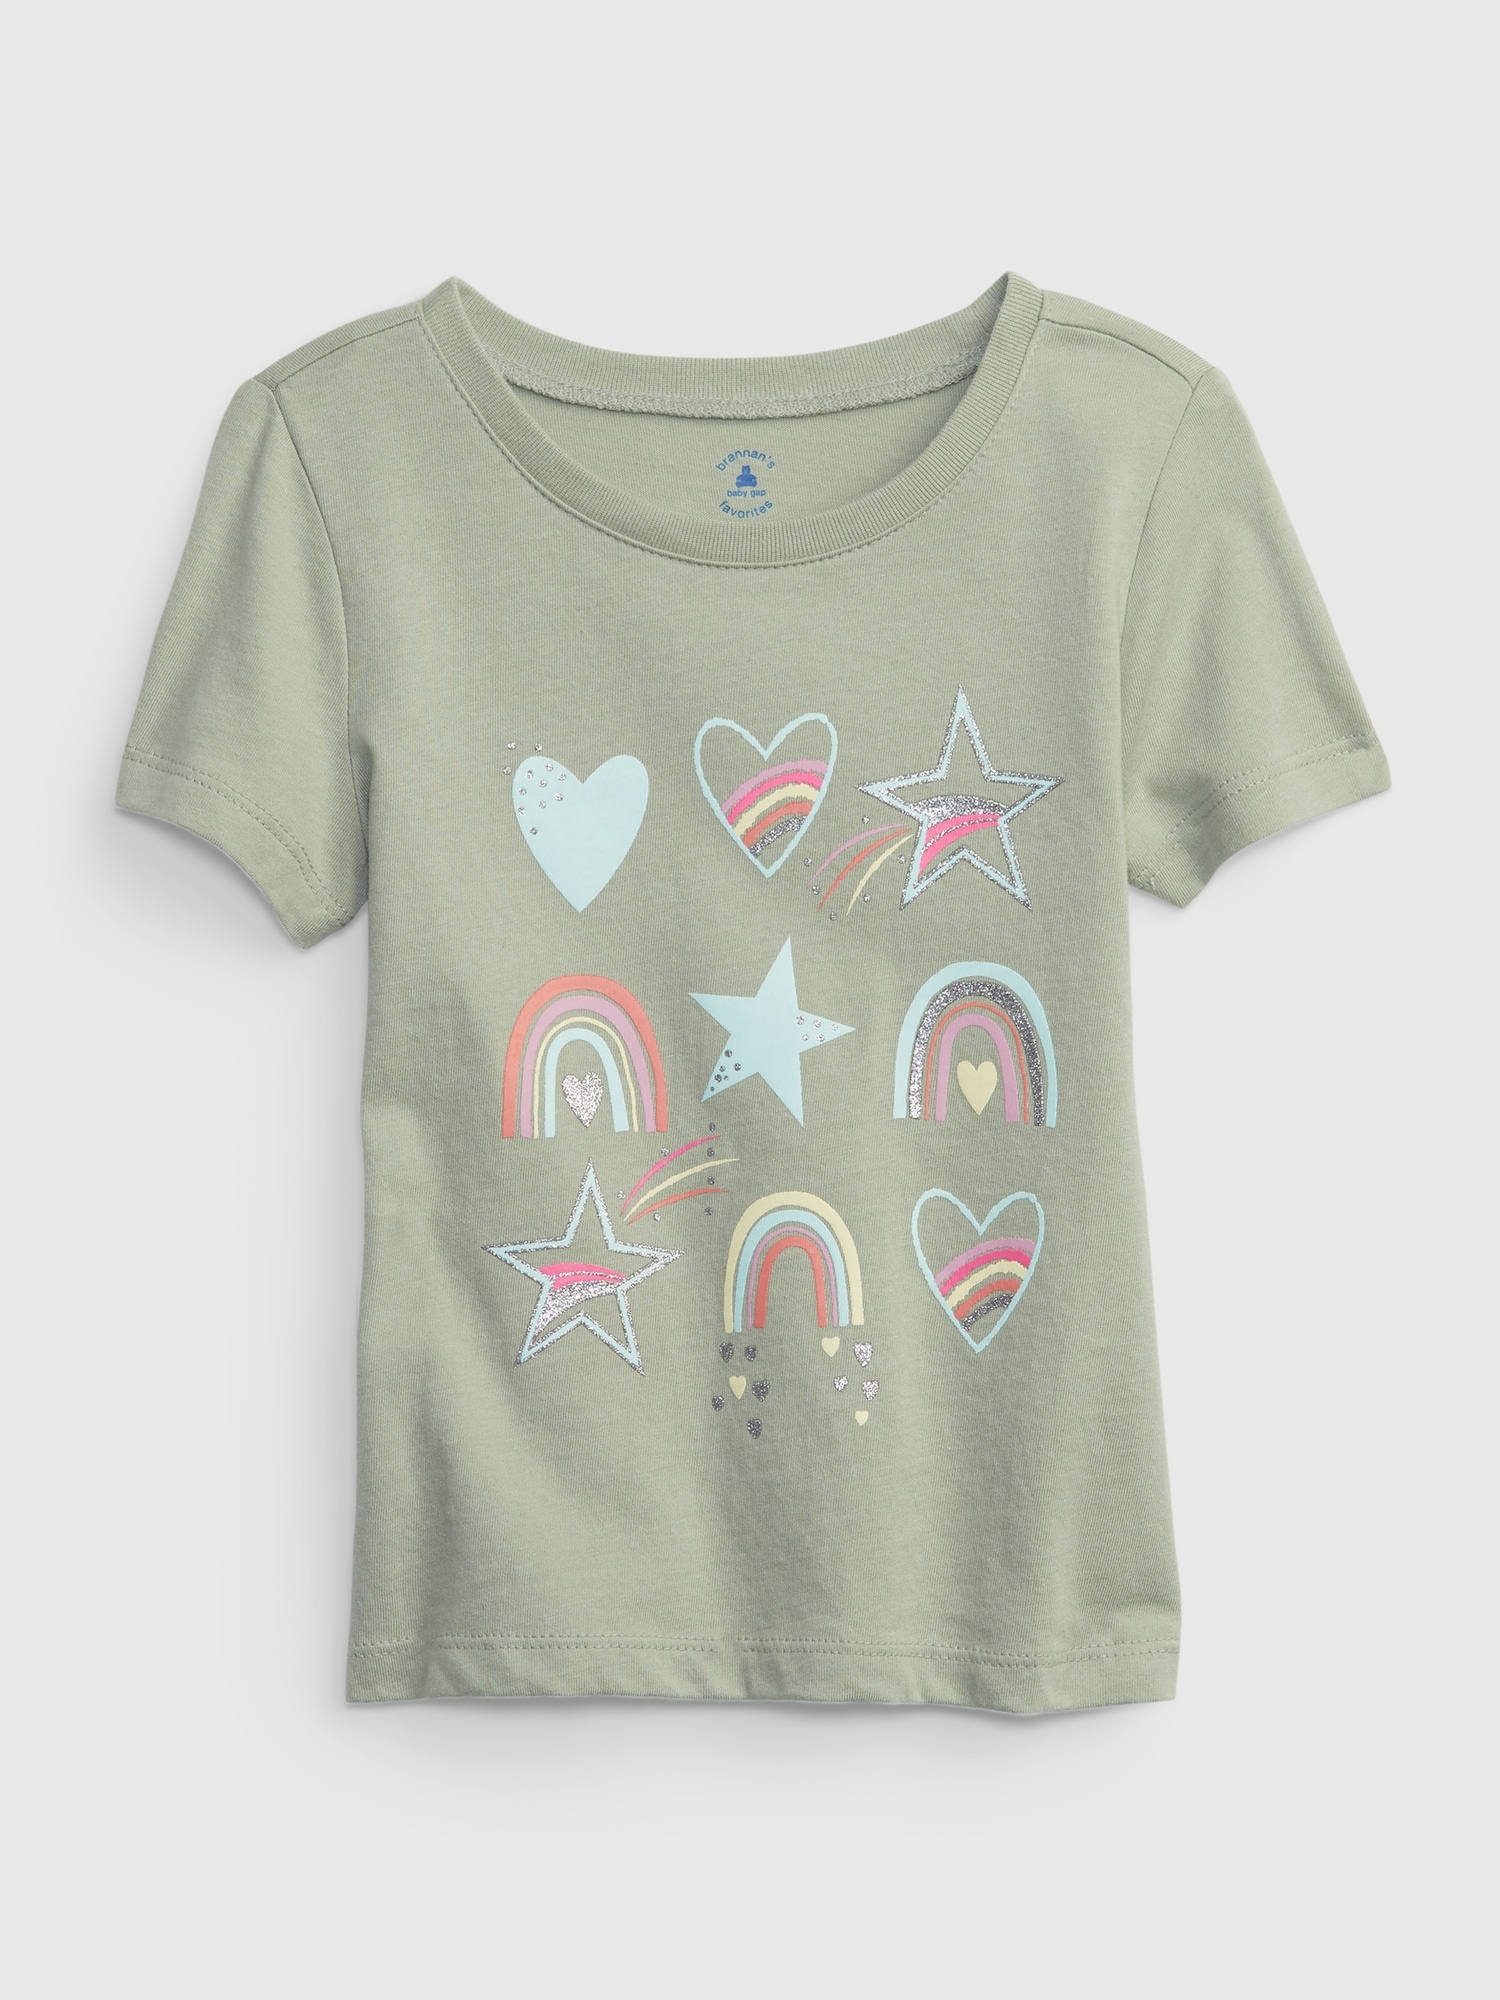 GAP Children's T-shirt With Print - Girls